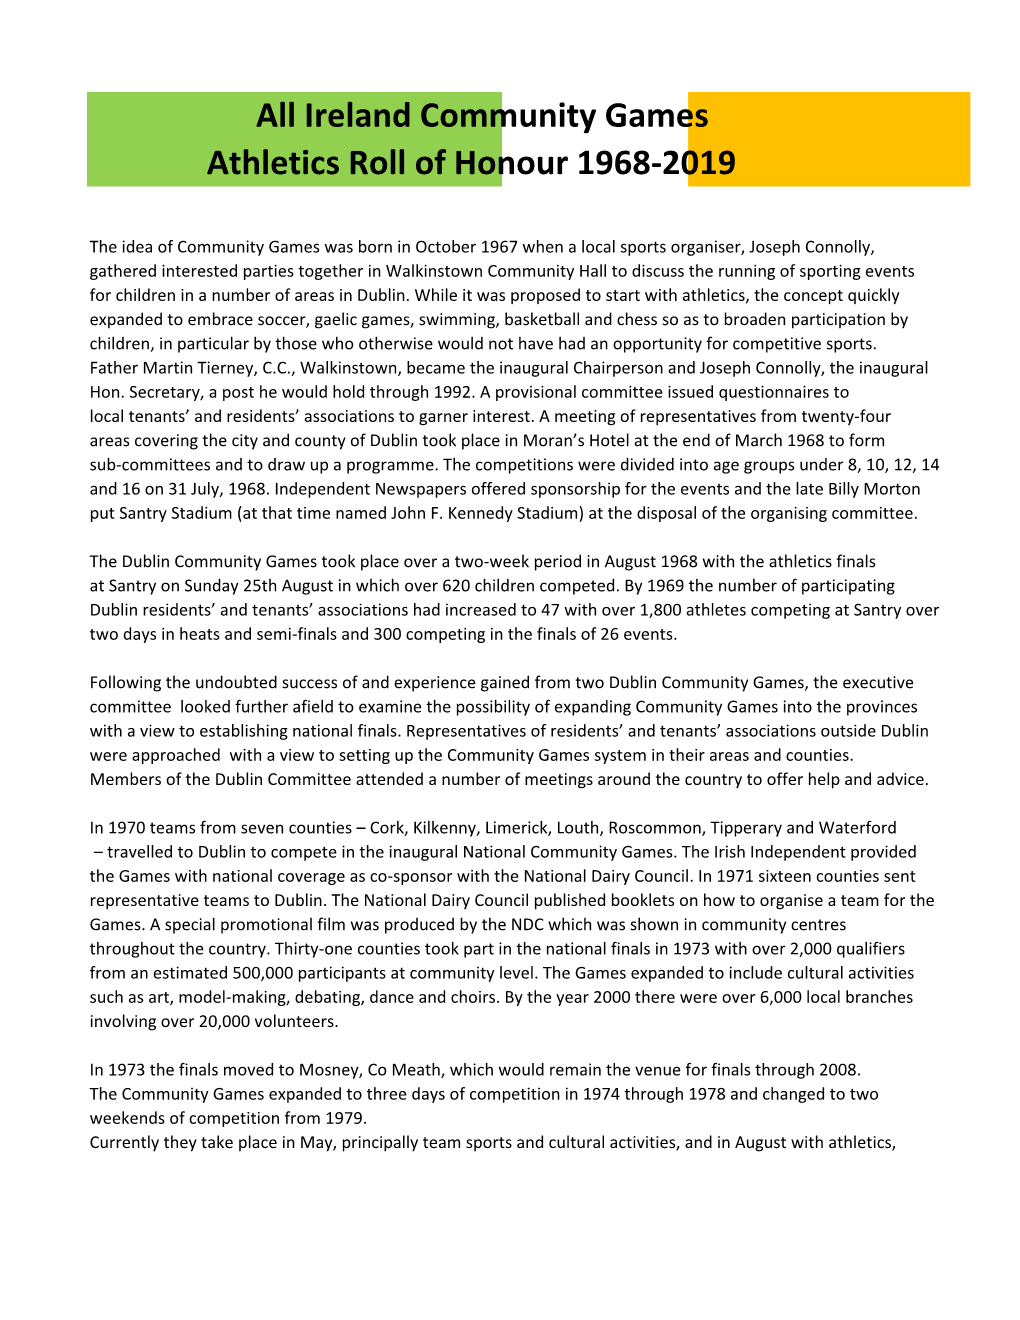 All Ireland Community Games Athletics Roll of Honour 1968-2019